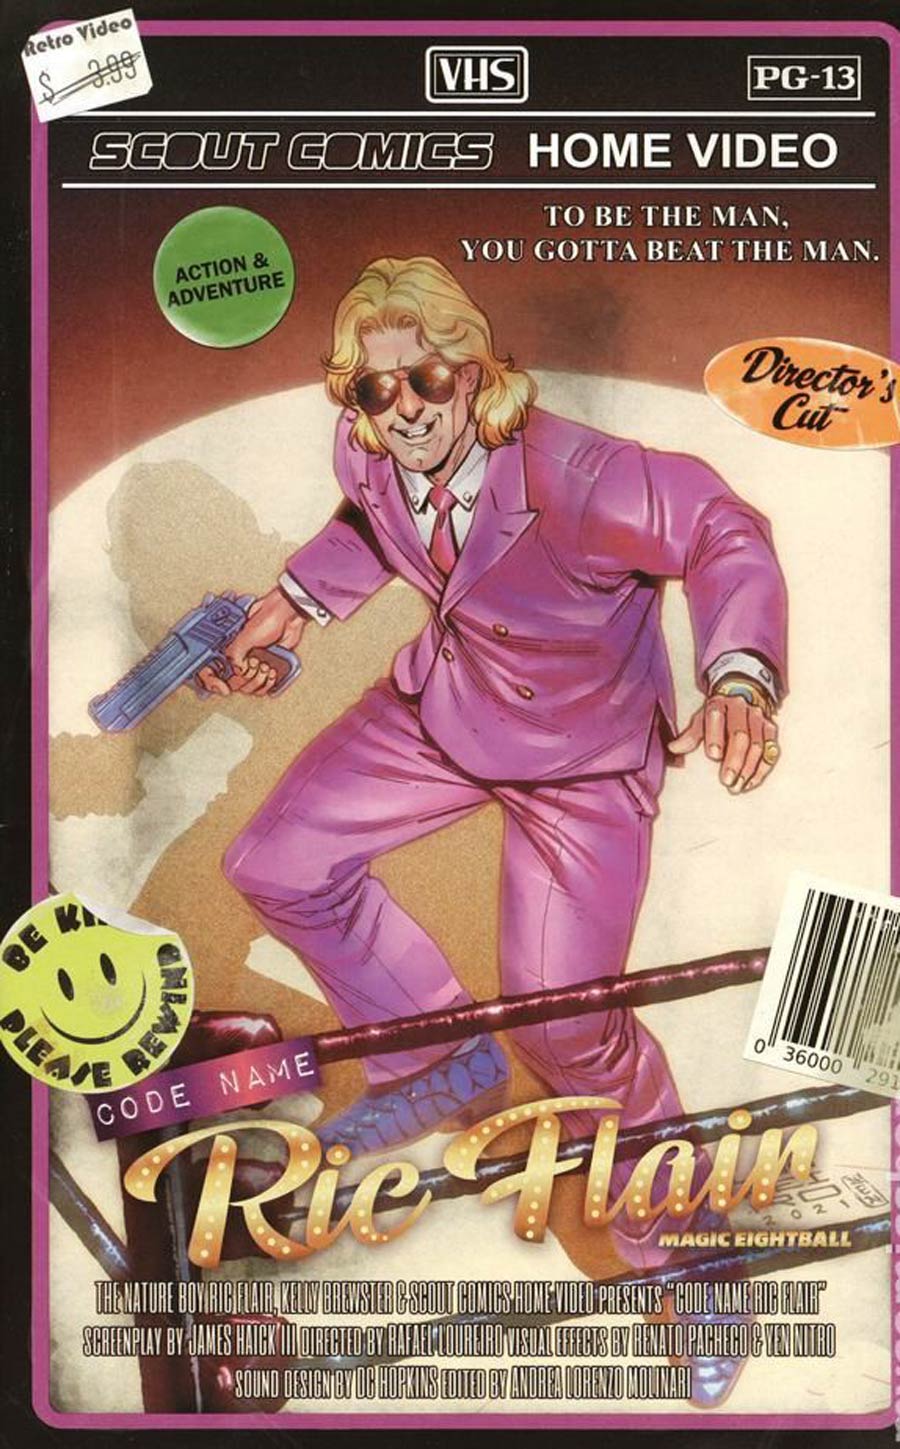 Codename Ric Flair Magic Eightball #1 Cover G Secret VHS Variant Cover